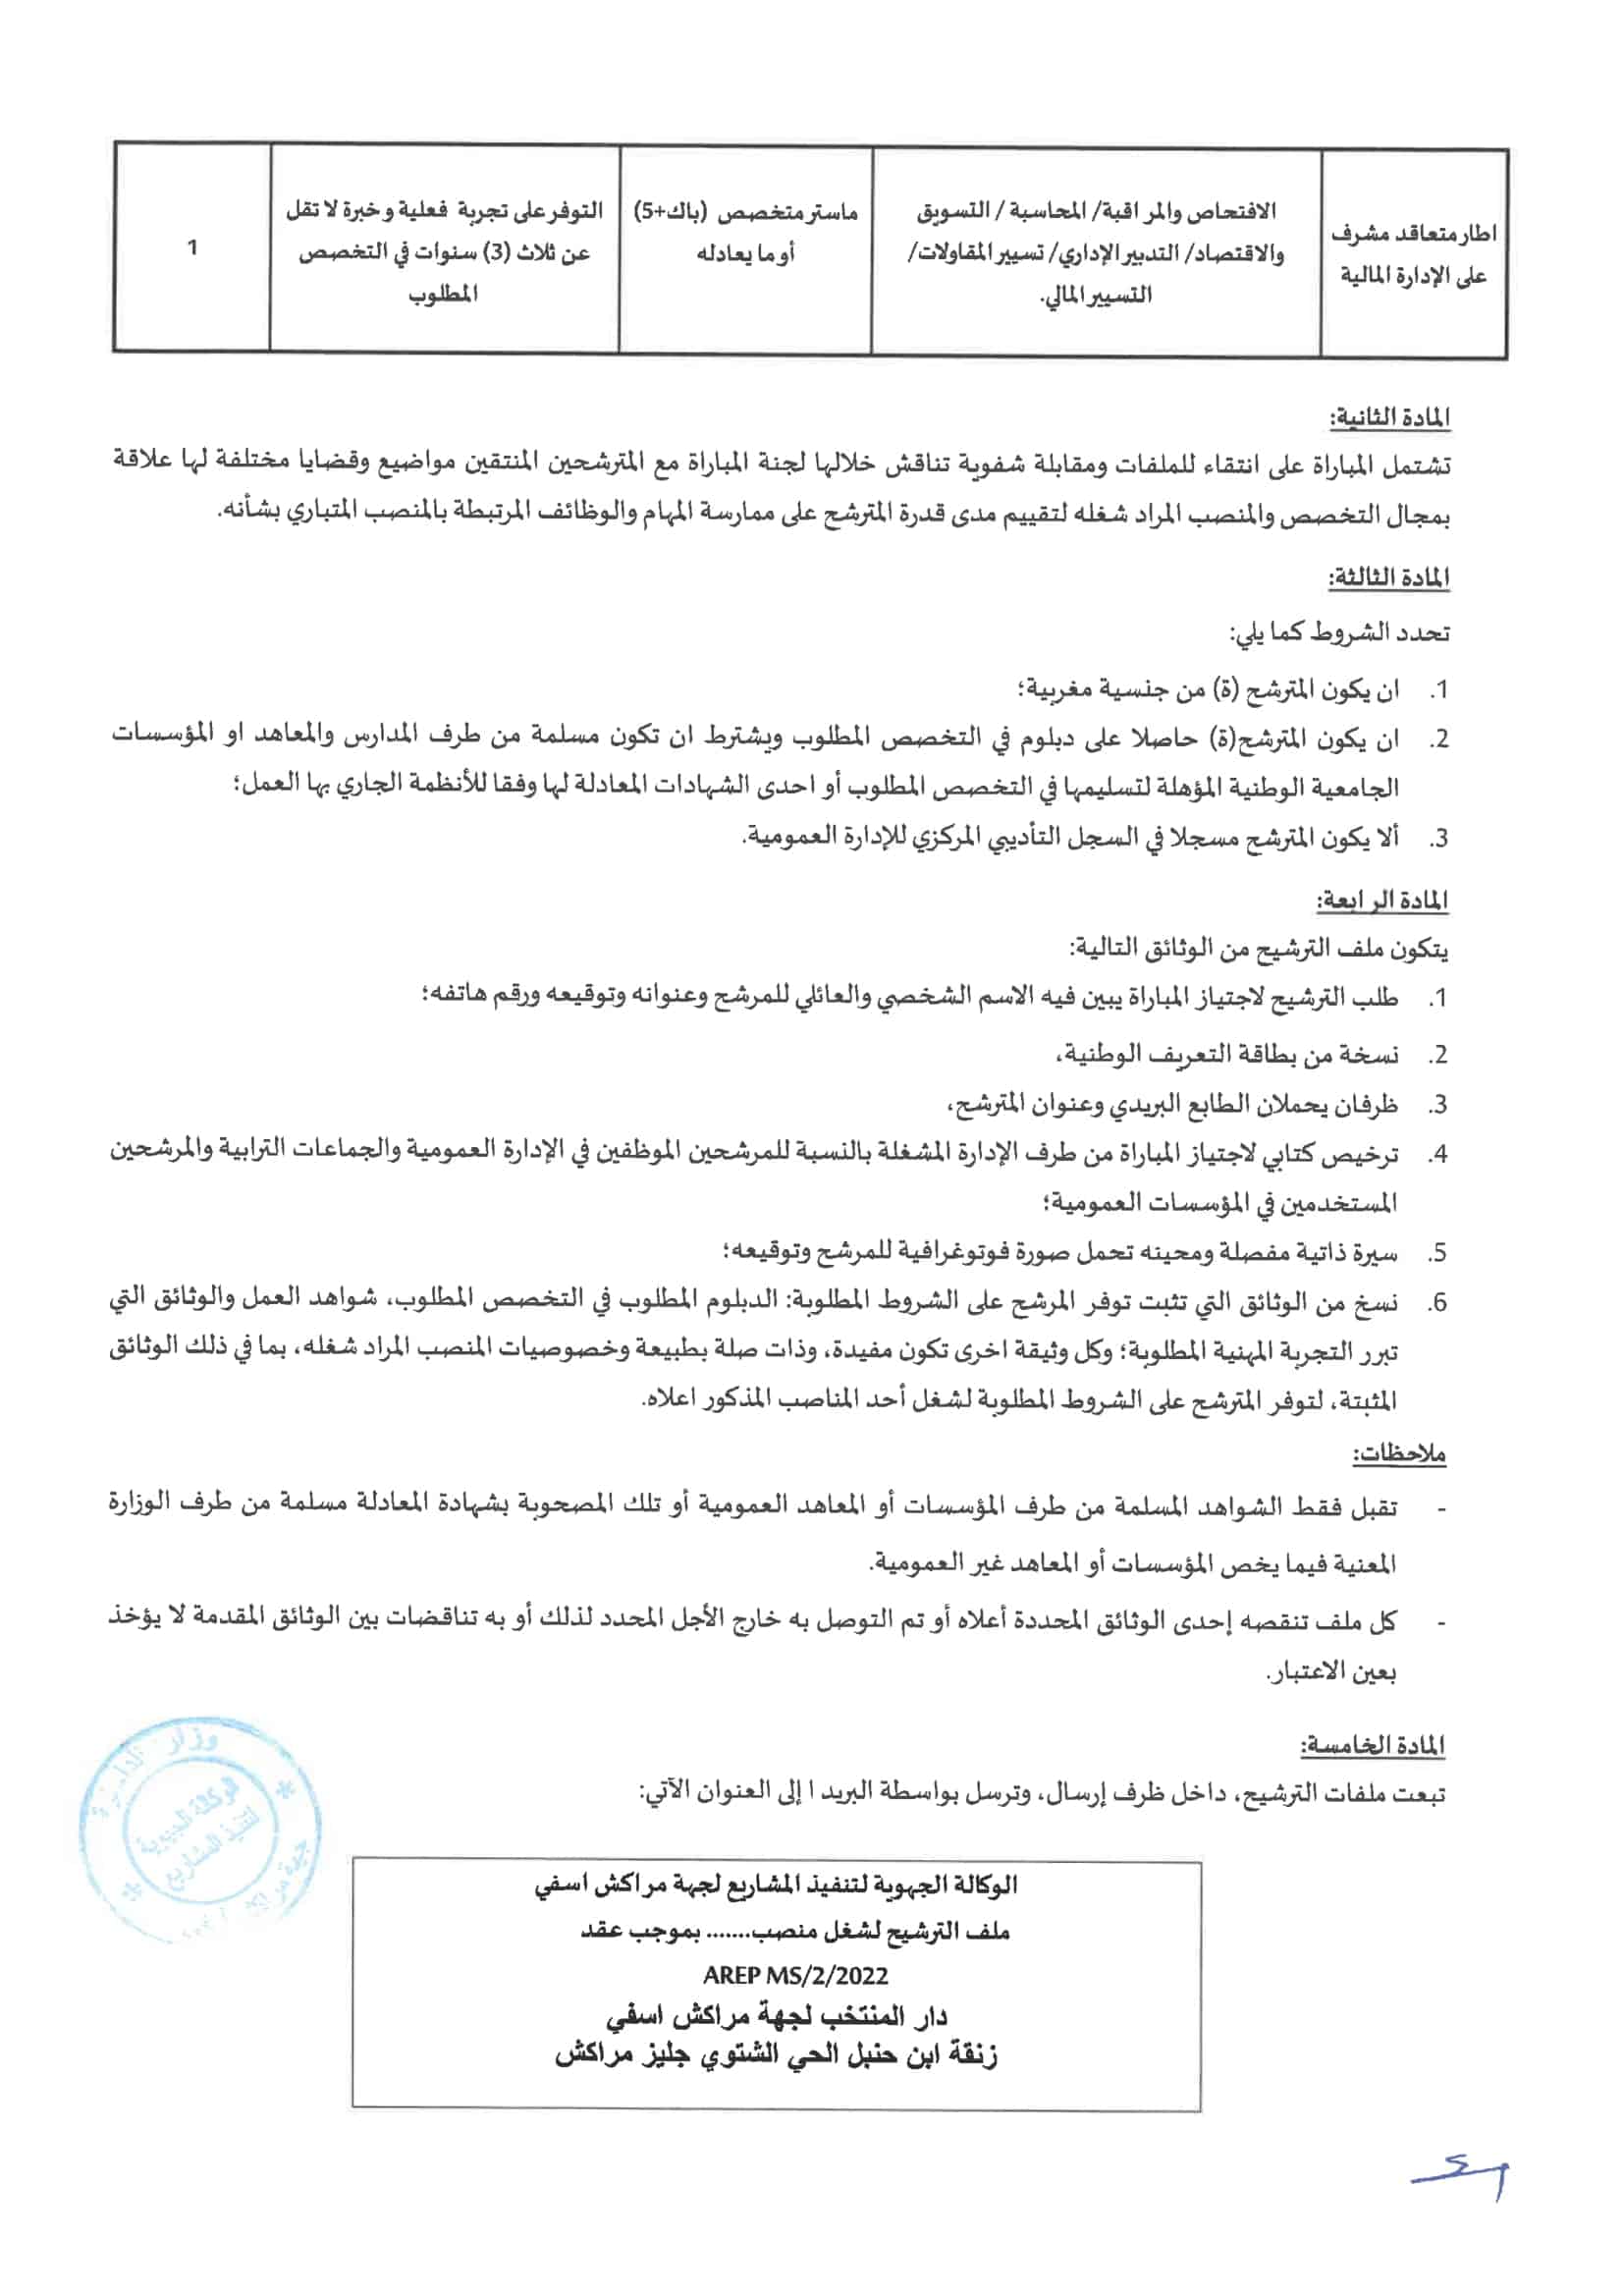 DcisionrecrutementcontractuelsAR 1 2 Concours AREP Marrakech Safi 2022 (16 Postes)